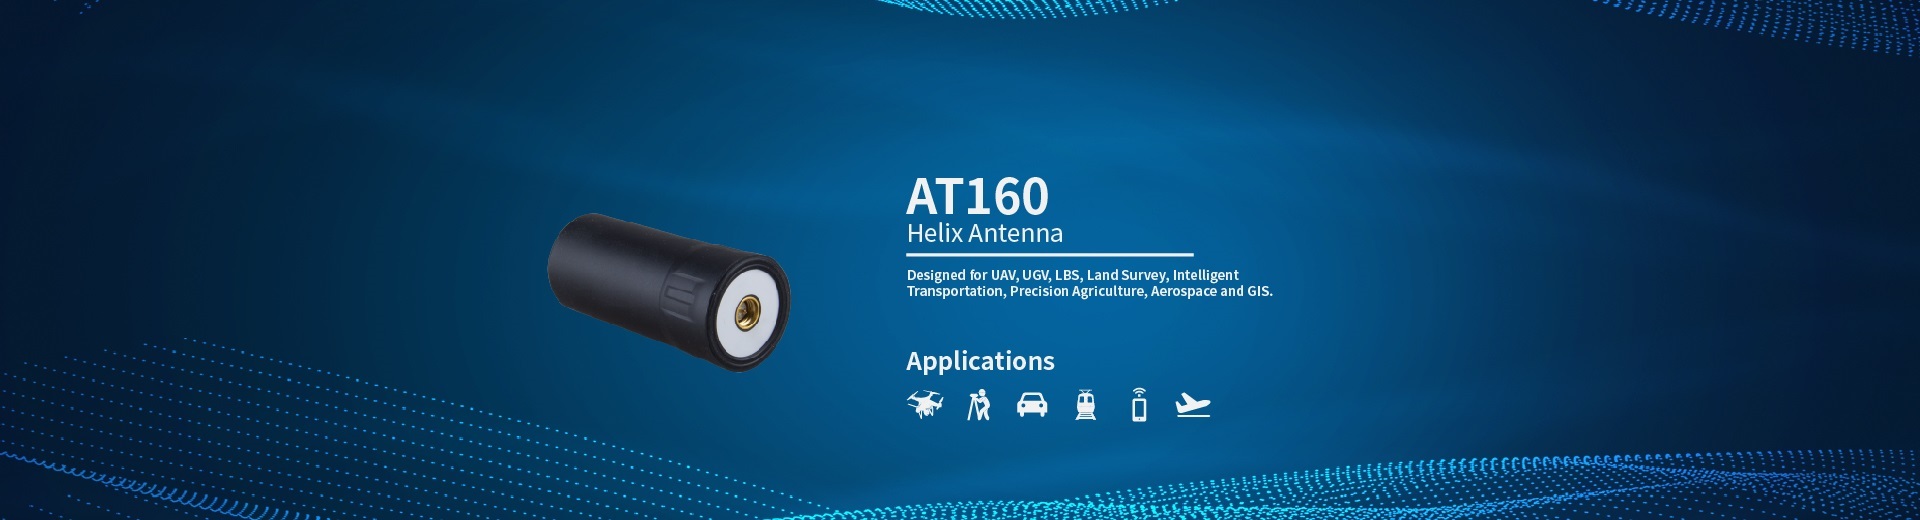 AT160 Helix Antenna